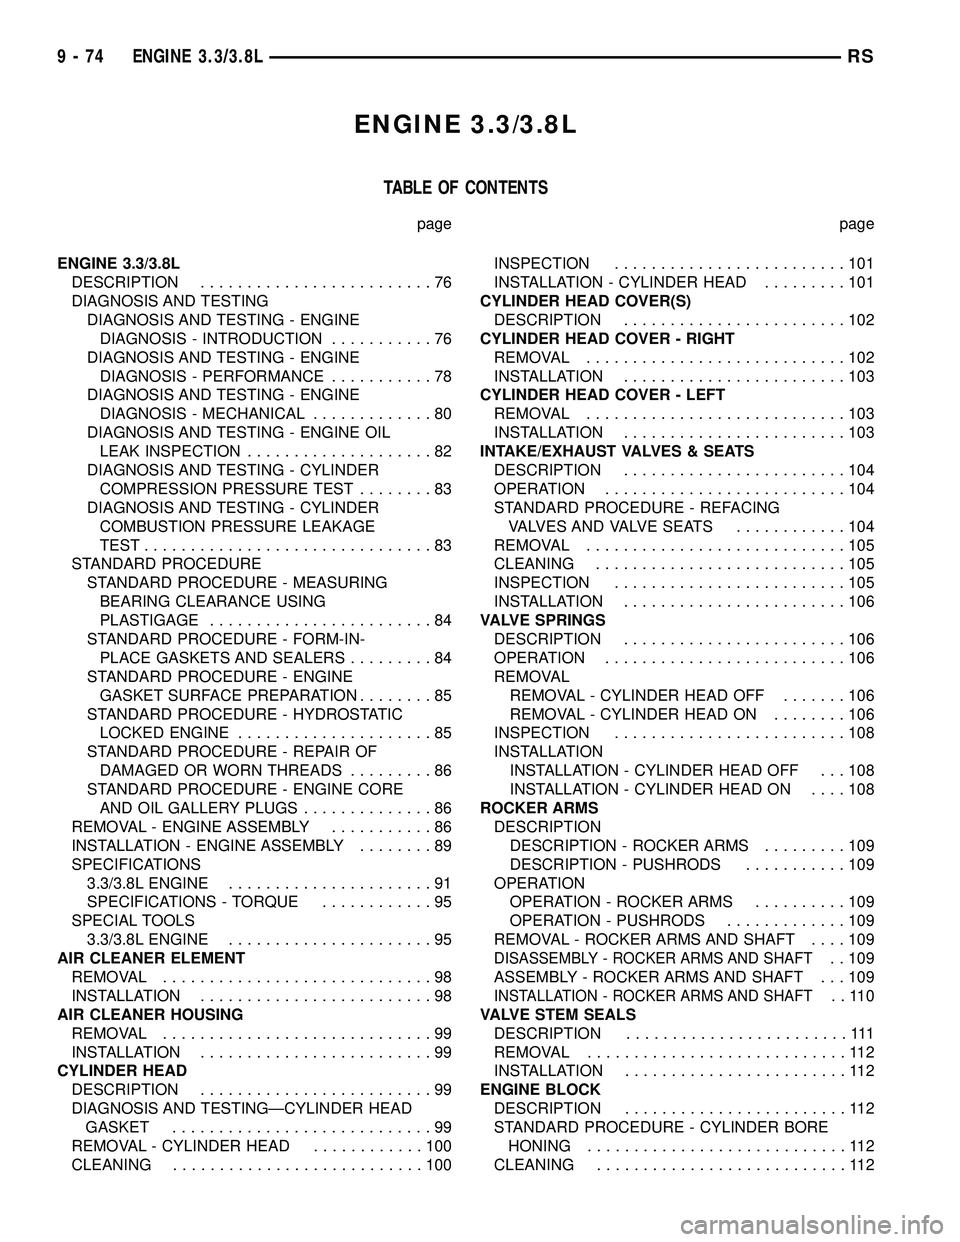 CHRYSLER VOYAGER 2004  Service Manual ENGINE 3.3/3.8L
TABLE OF CONTENTS
page page
ENGINE 3.3/3.8L
DESCRIPTION.........................76
DIAGNOSIS AND TESTING
DIAGNOSIS AND TESTING - ENGINE
DIAGNOSIS - INTRODUCTION...........76
DIAGNOSIS 